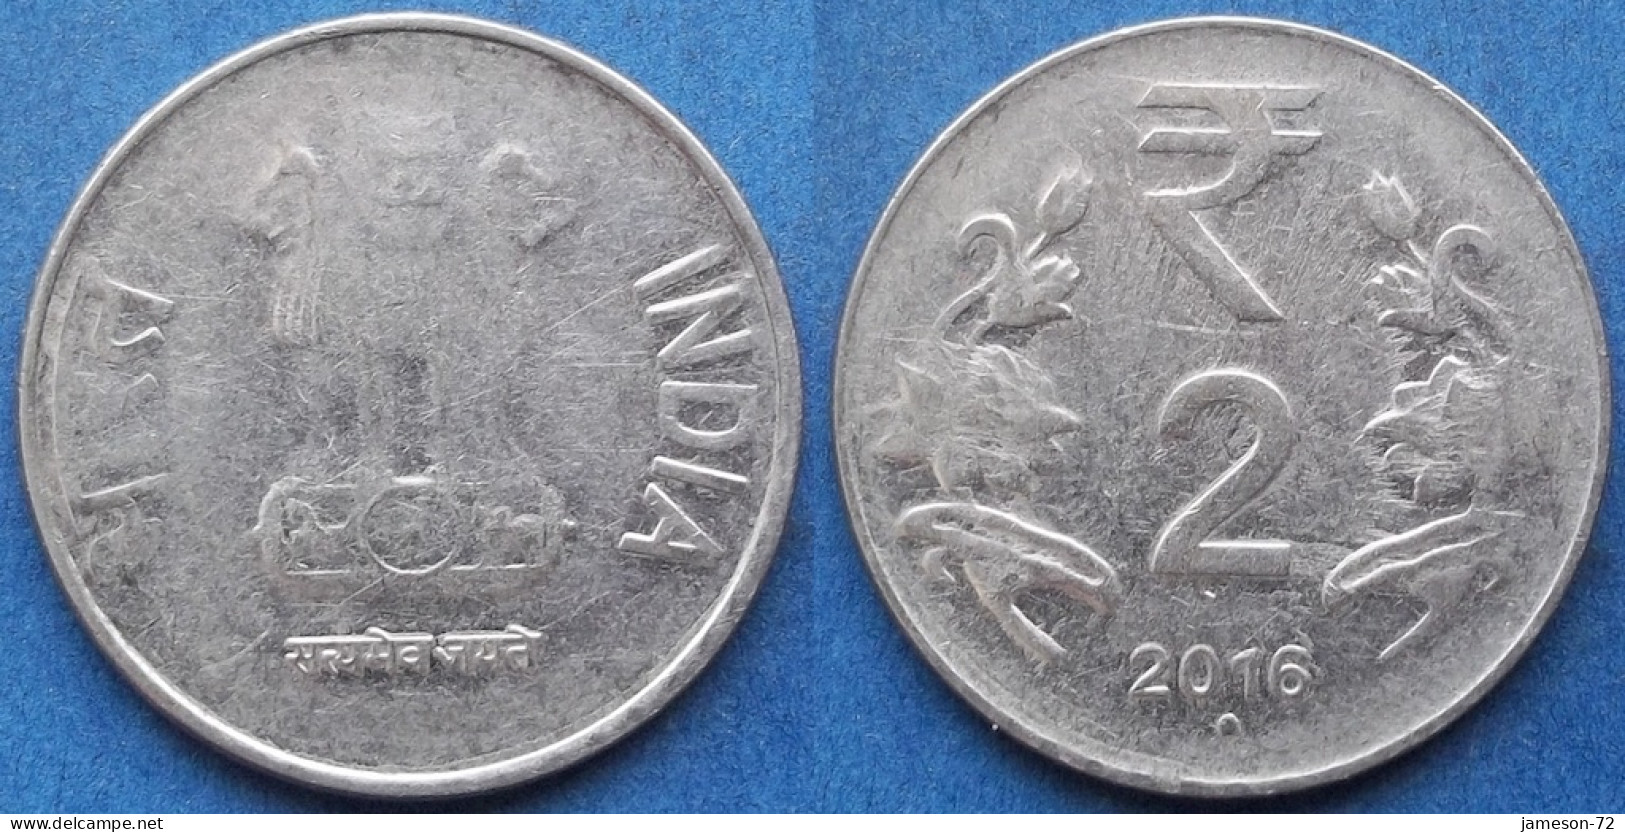 INDIA - 2 Rupees 2016 "Lotus Flowers" KM# 395 Republic Decimal Coinage (1957) - Edelweiss Coins - Géorgie